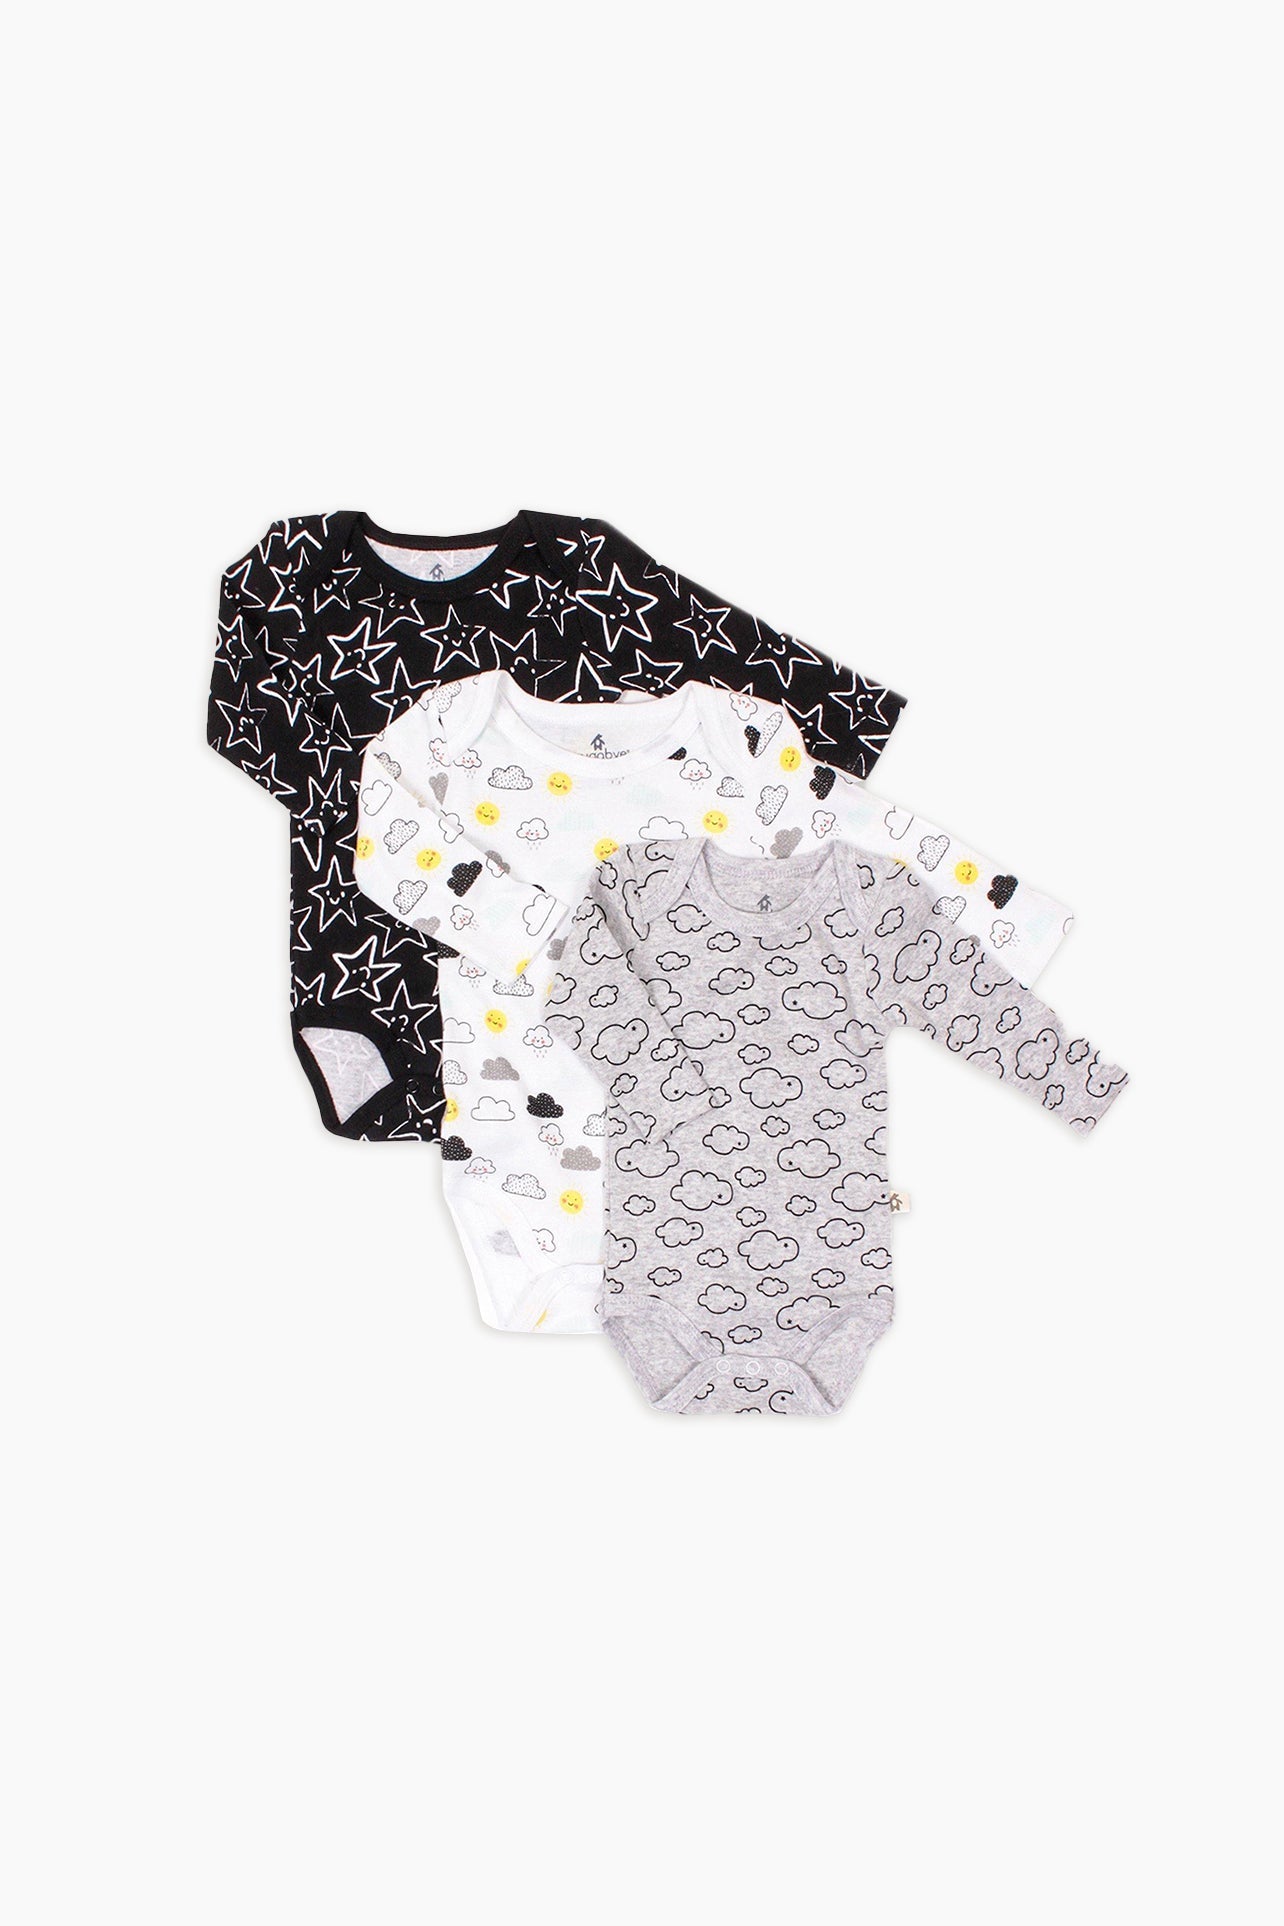 Snugabye Black & White Baby 3-Pack Long Sleeve Bodysuits